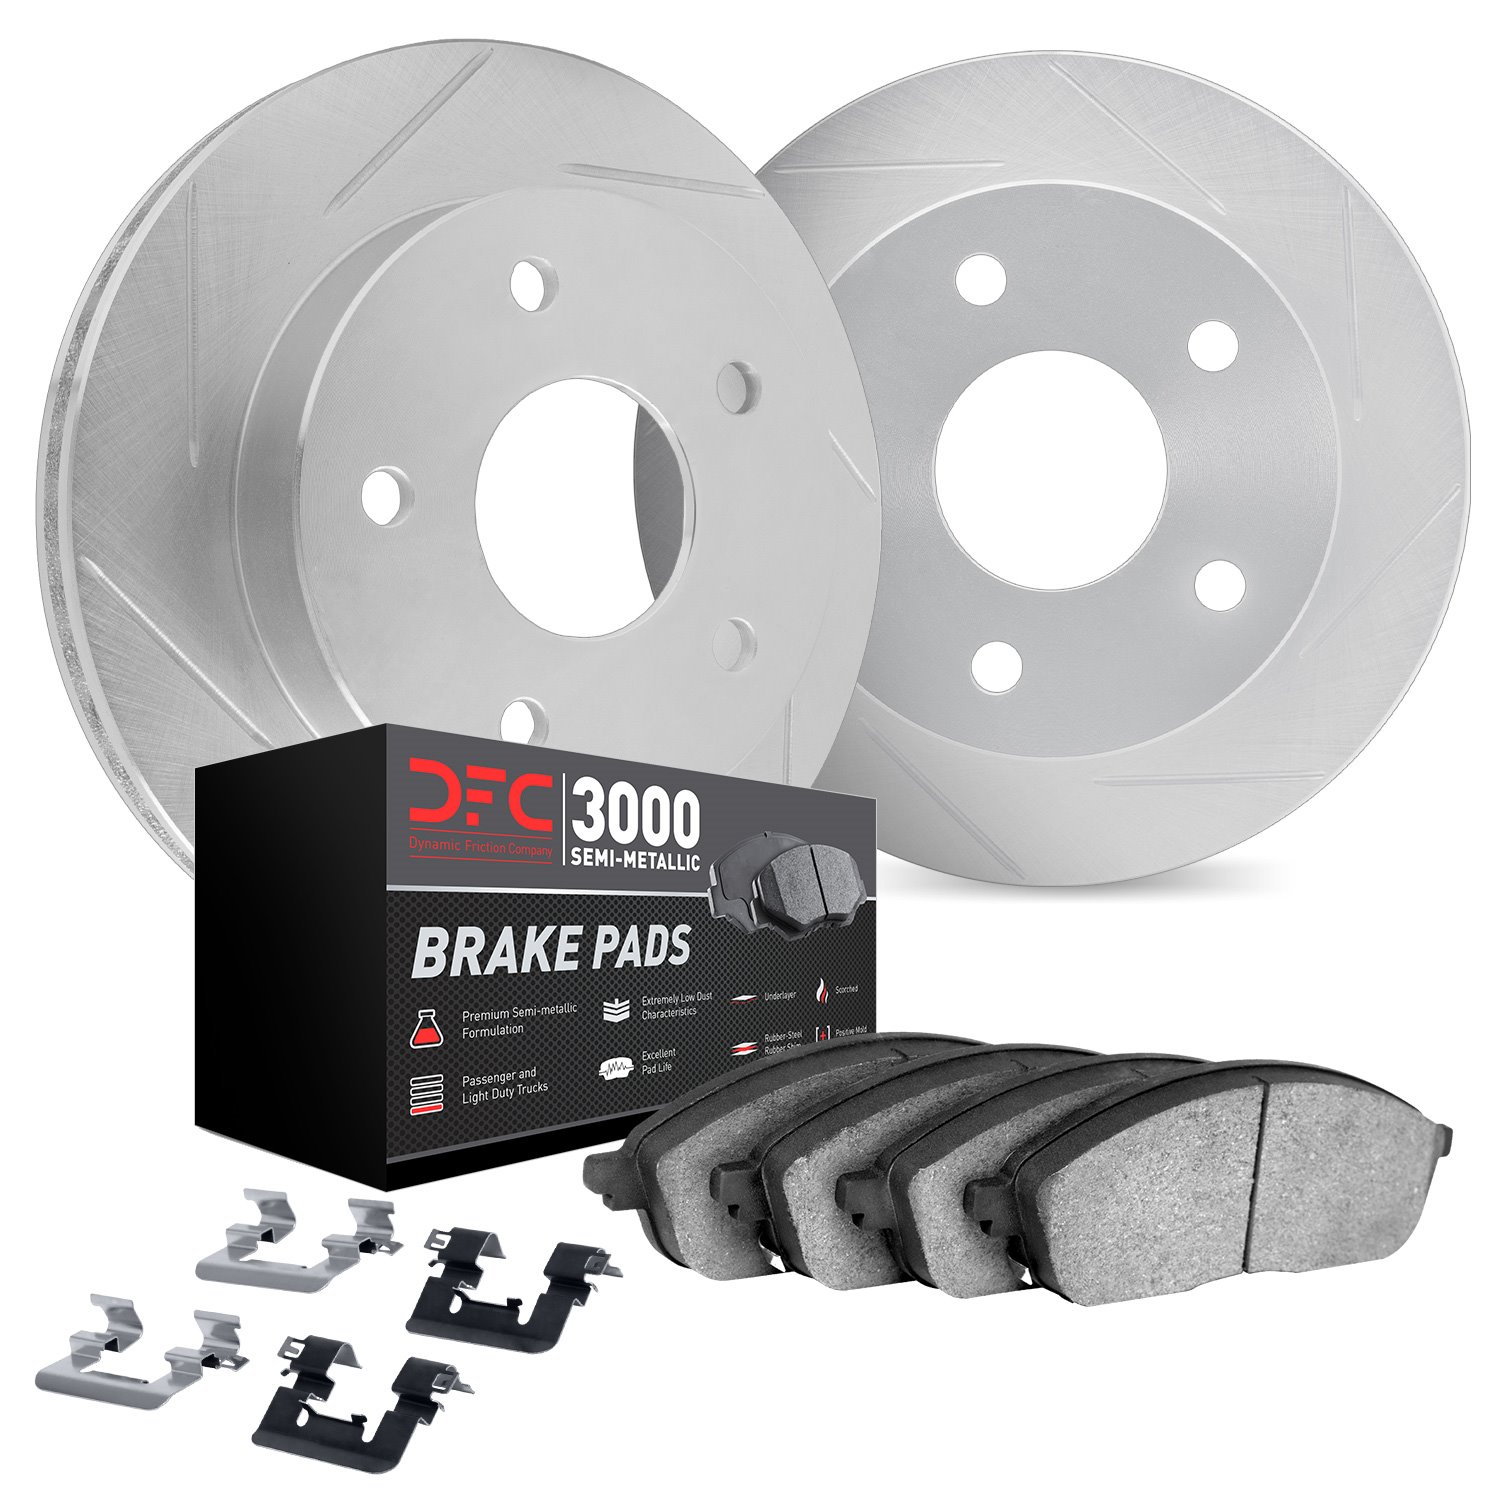 5112-67102 Slotted Brake Rotors with 3000-Series Semi-Metallic Brake Pads Kit & Hardware [Silver], Fits Select Infiniti/Nissan,